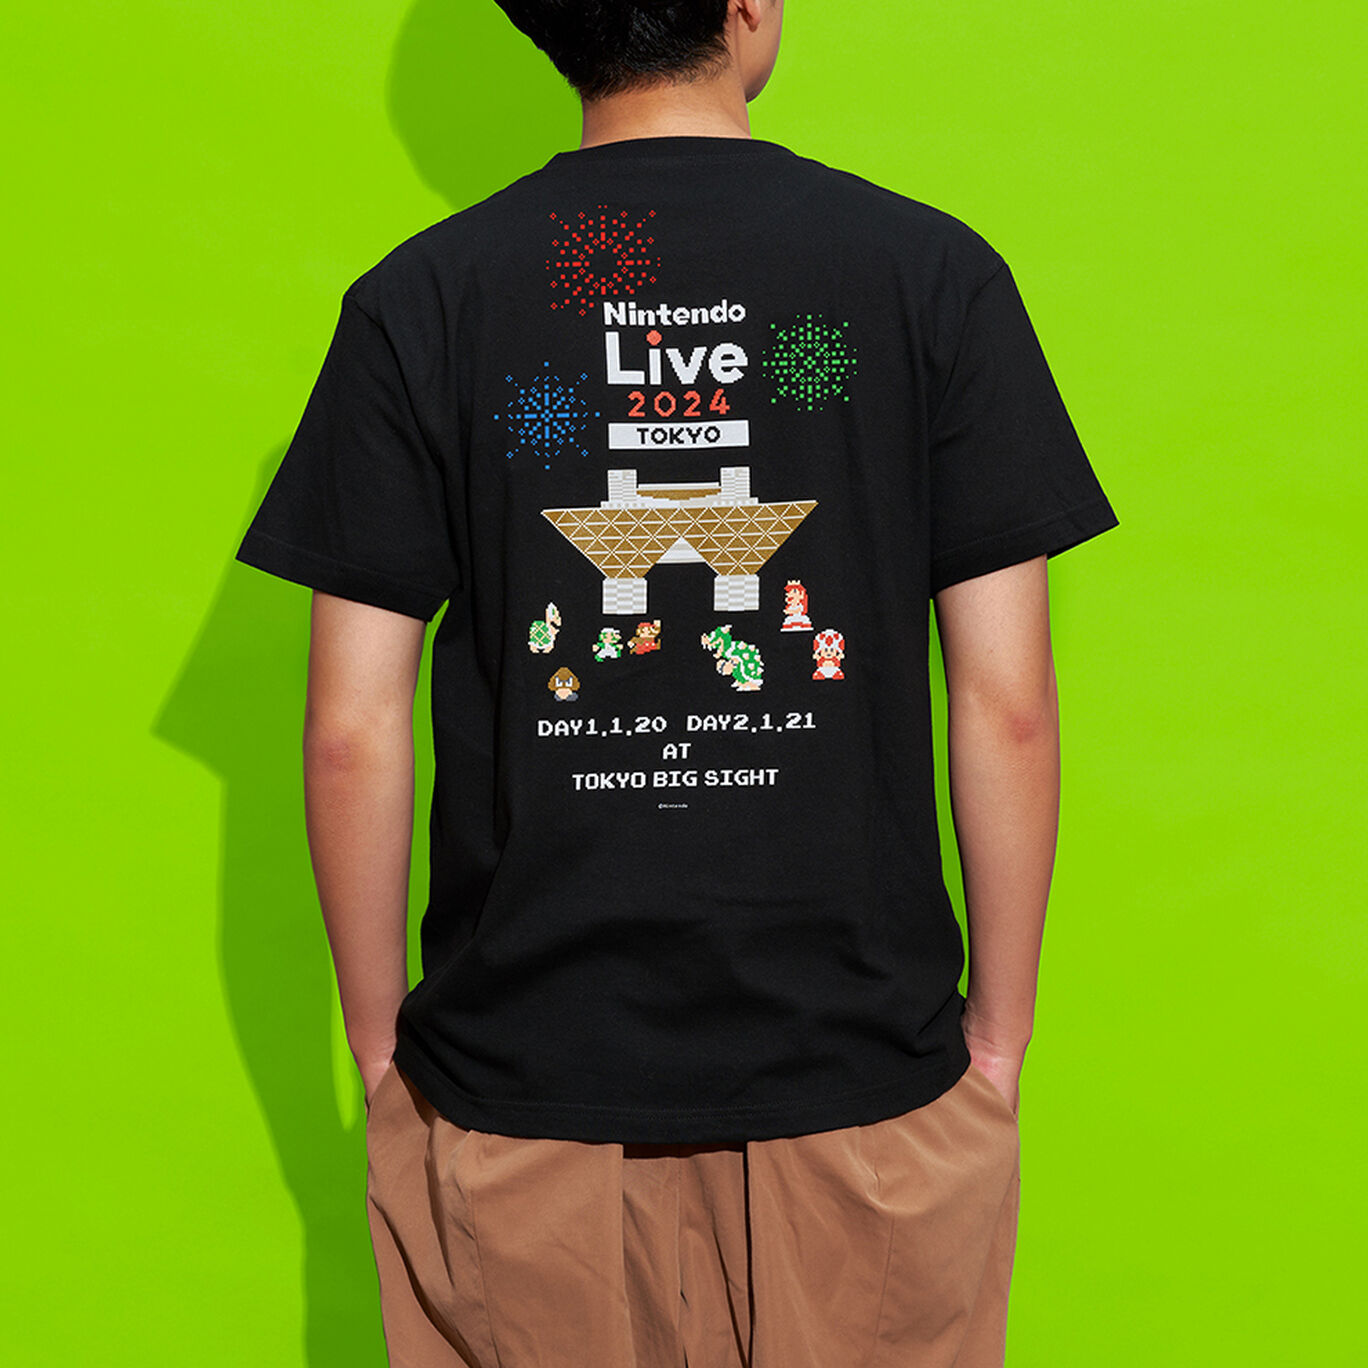 Nintendo Live 2024 TOKYO Tシャツ　8-bit マリオ　S